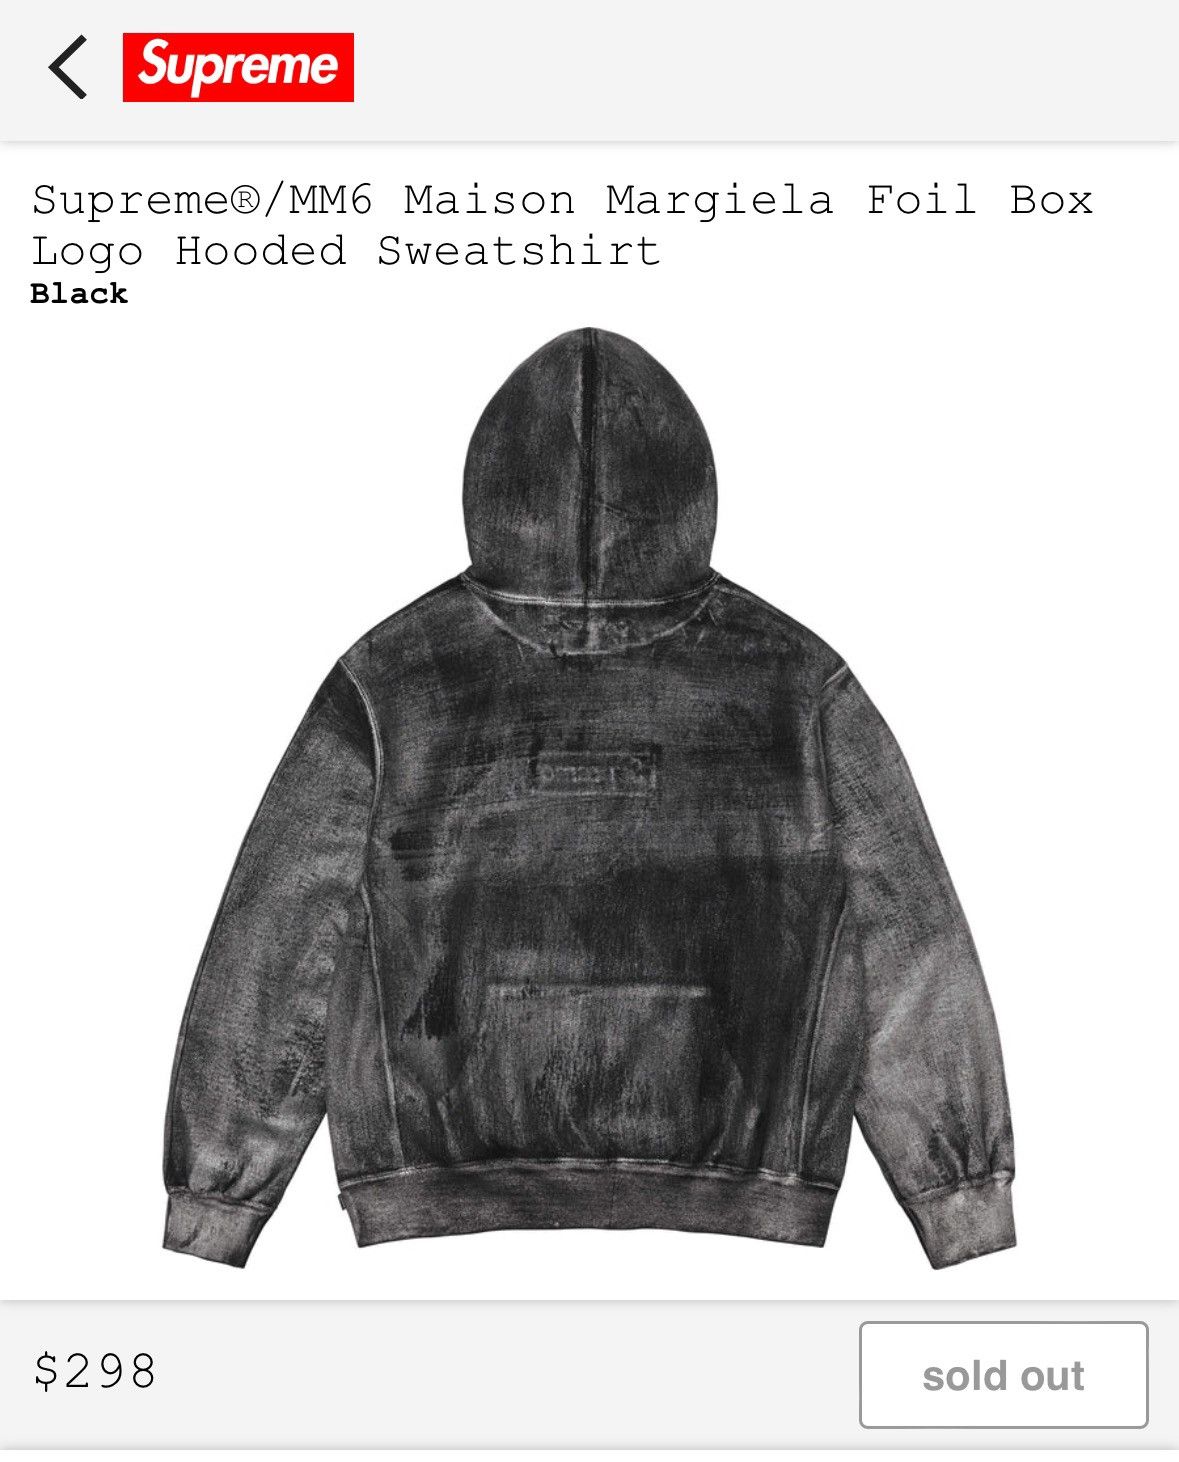 Supreme Supreme x Maison Margiela Foil Box Logo Hoodie “Black” (M) | Grailed